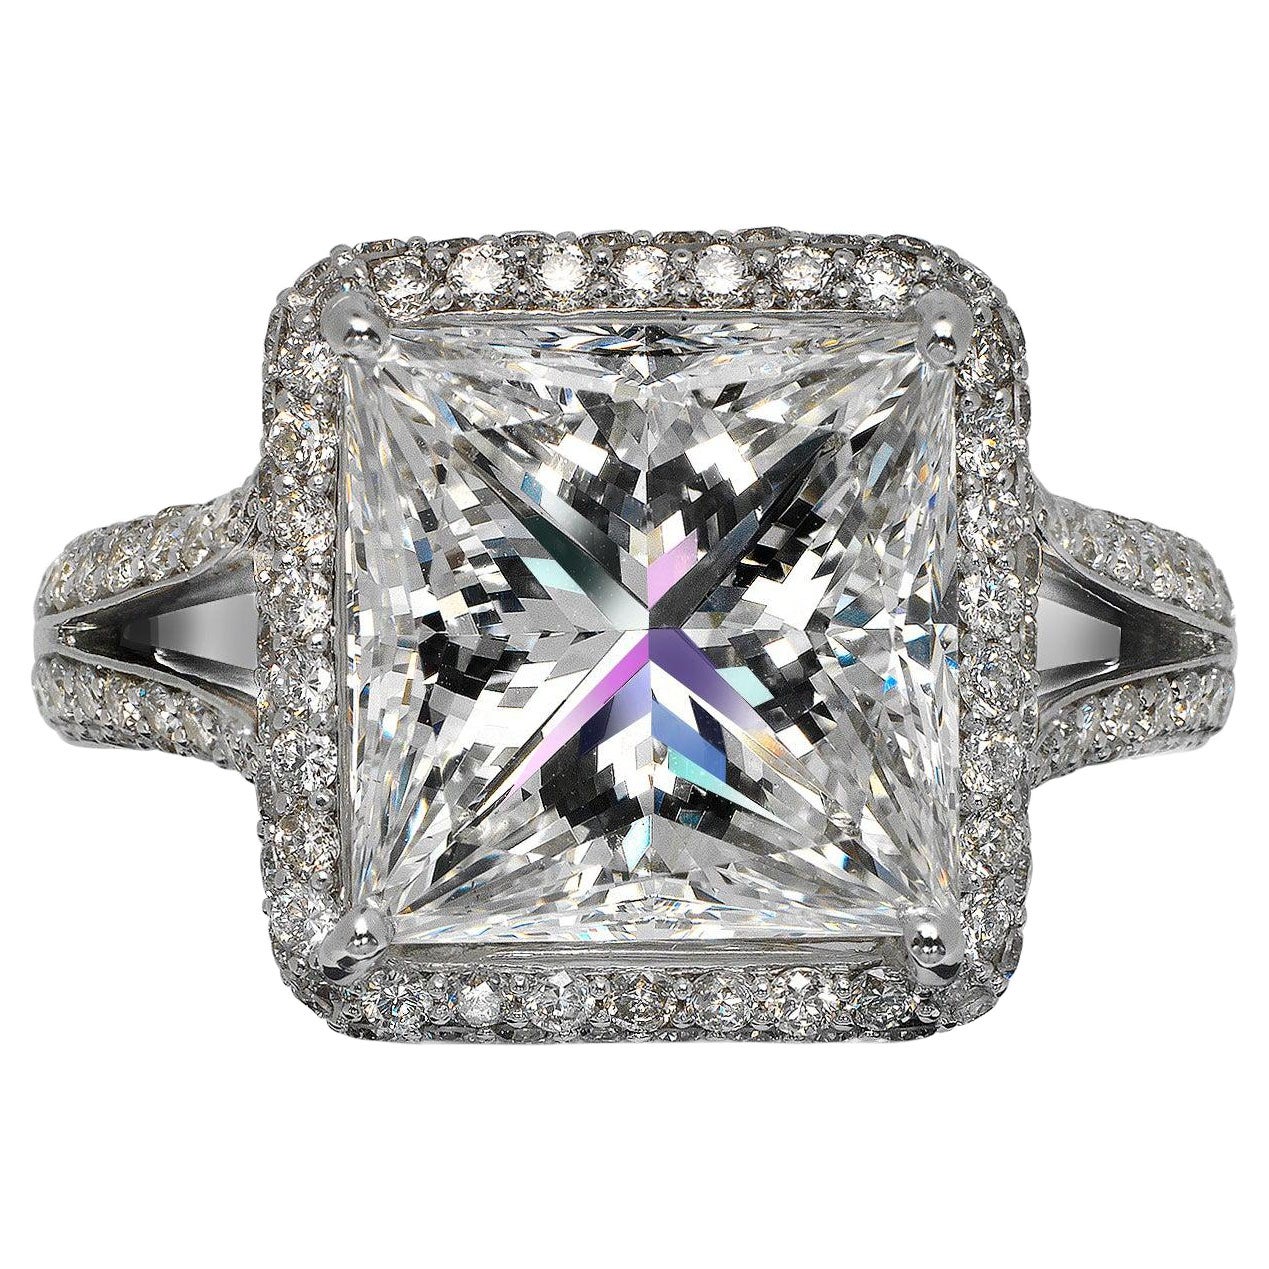 7 Carat Princess Cut Diamond Engagement Ring GIA Certified G VS